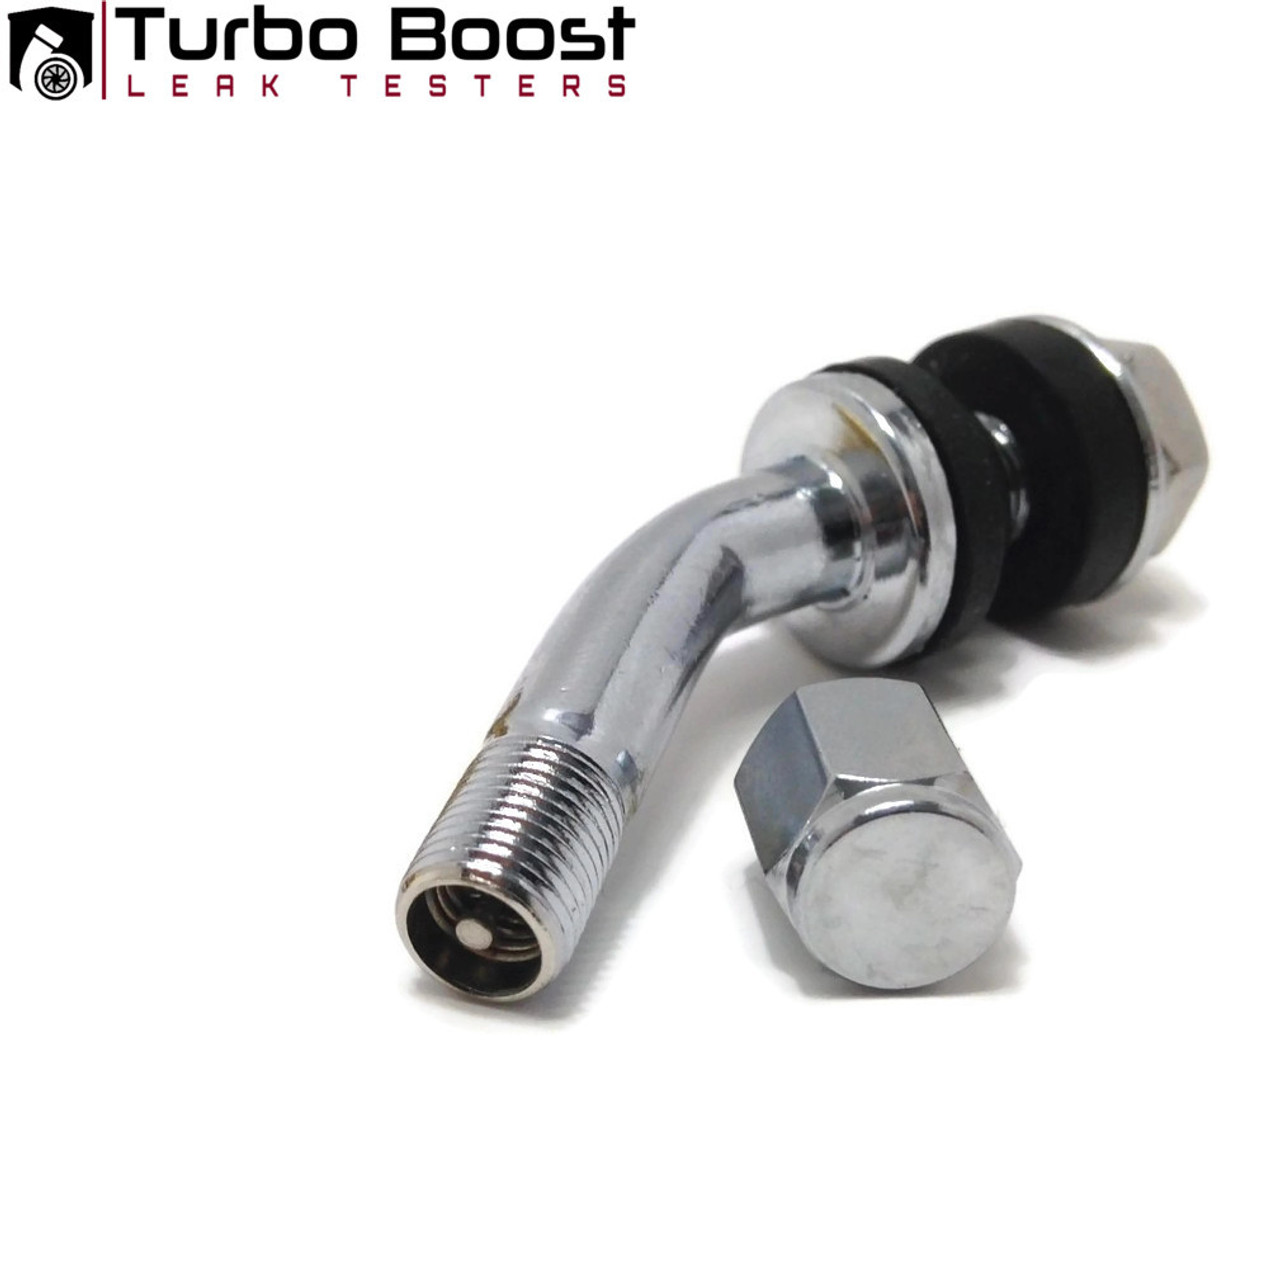 4" Turbo Boost Leak Testers - END CAP - 6061 Billet Aluminum 15 PSI T-BOLT - PREMIUM